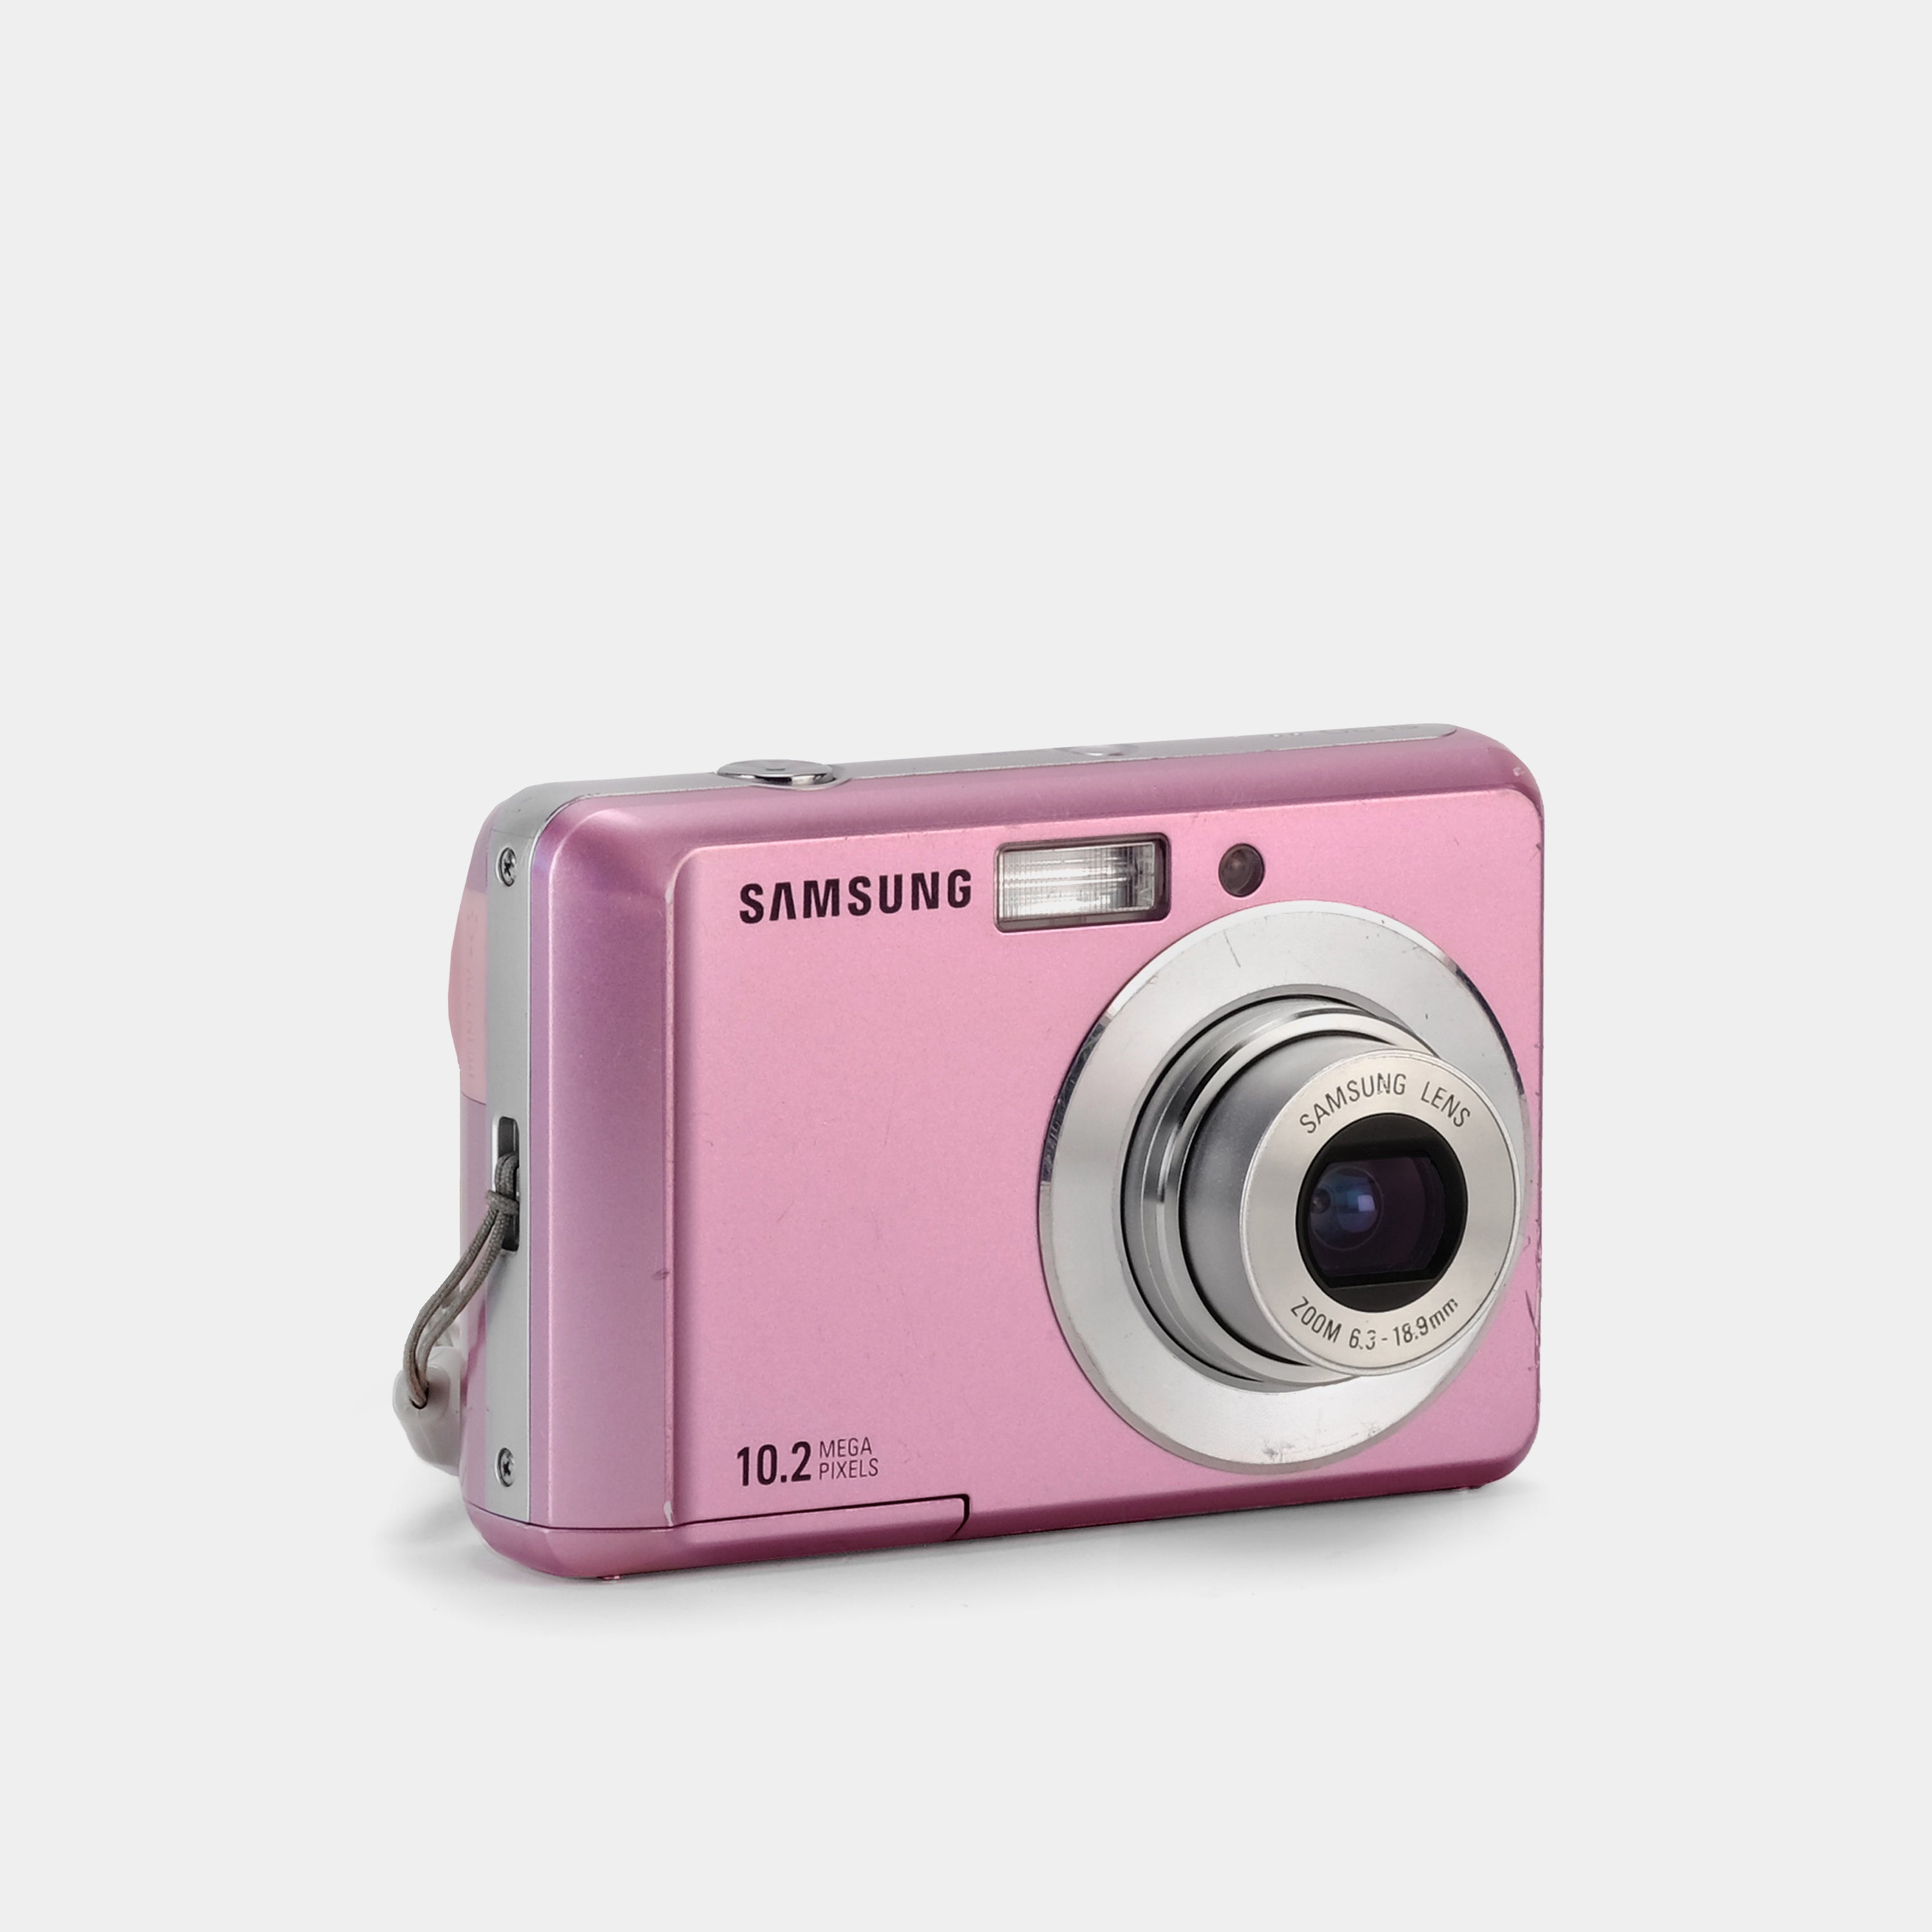 Samsung SL30 Point and Shoot Digital Camera